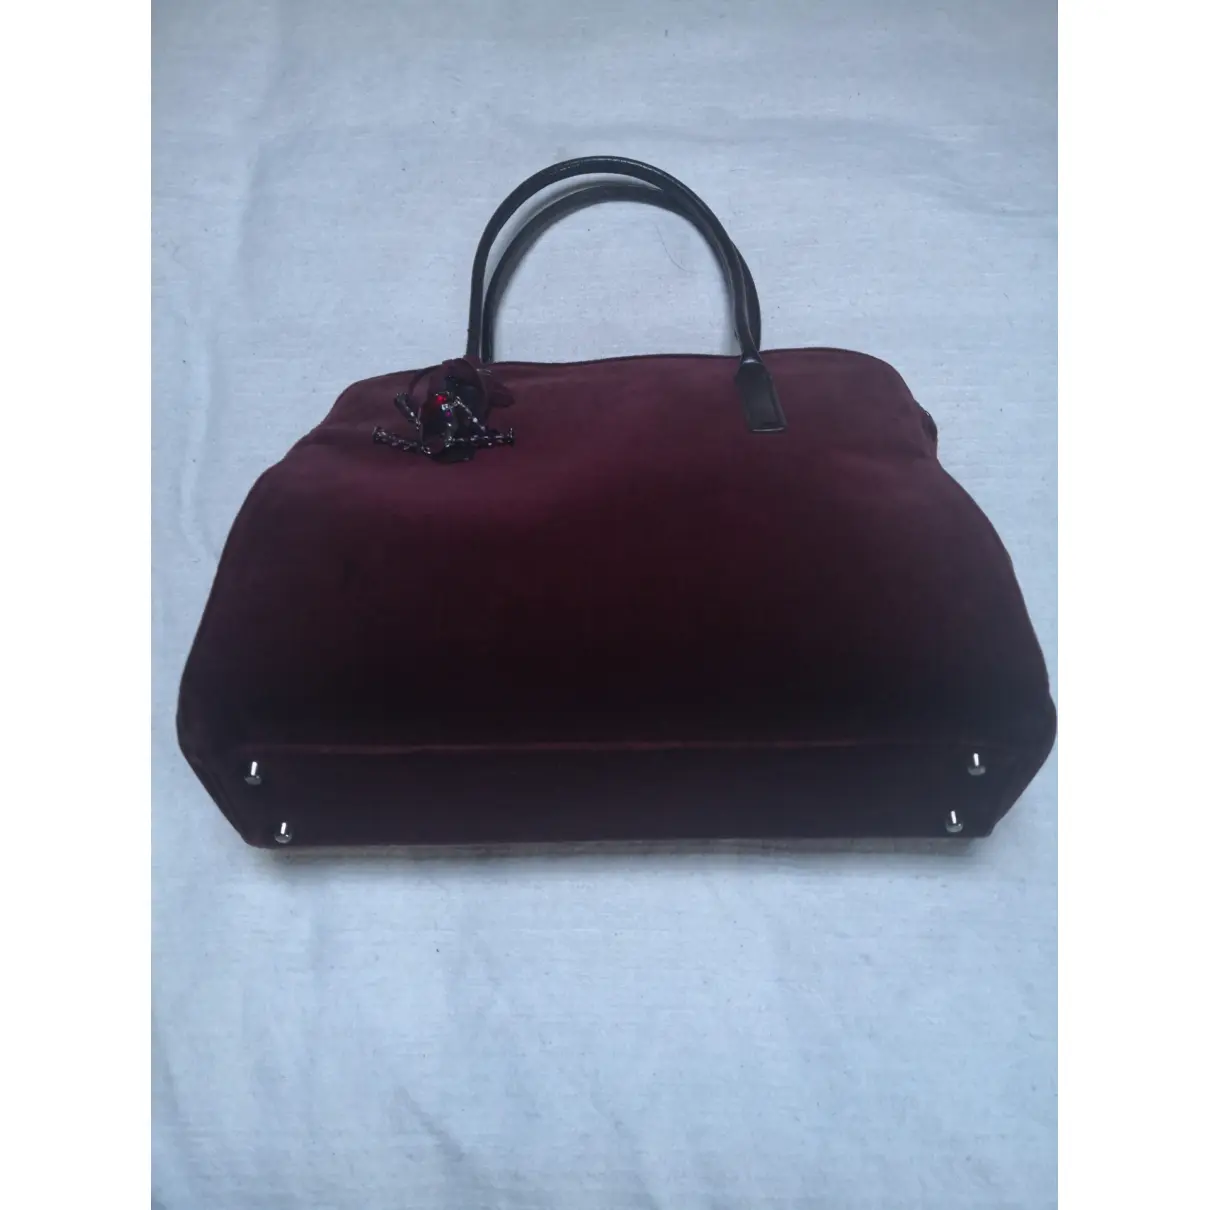 Buy Prada Mirage velvet handbag online - Vintage